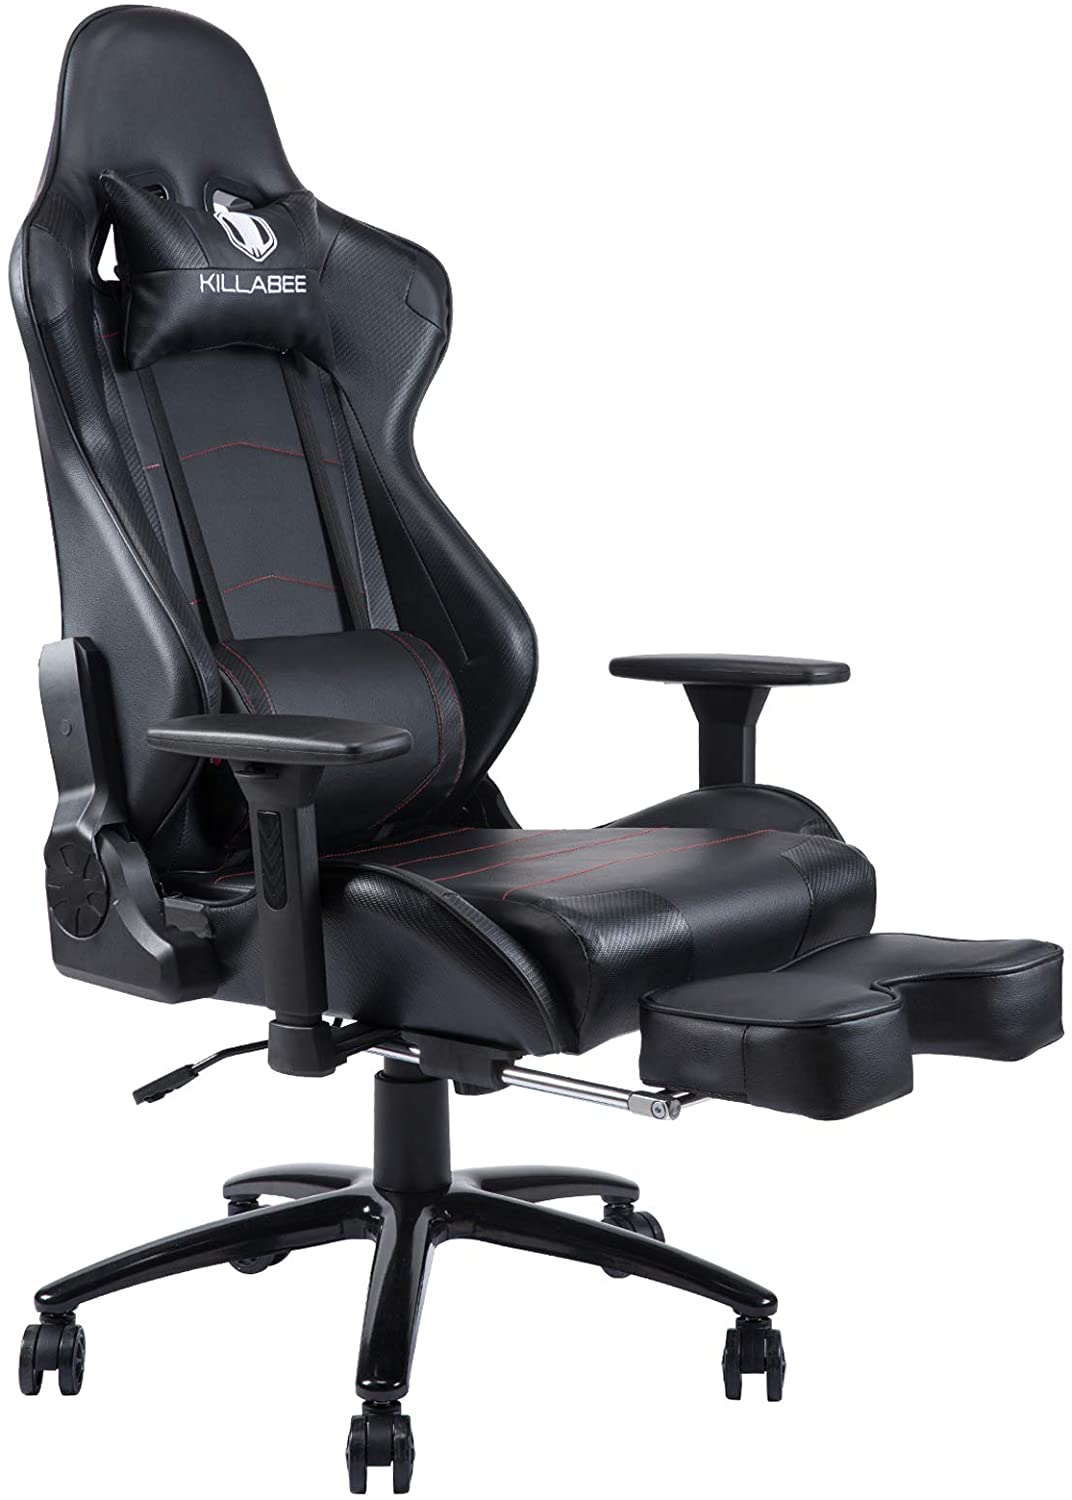 Executive flight gaming chair